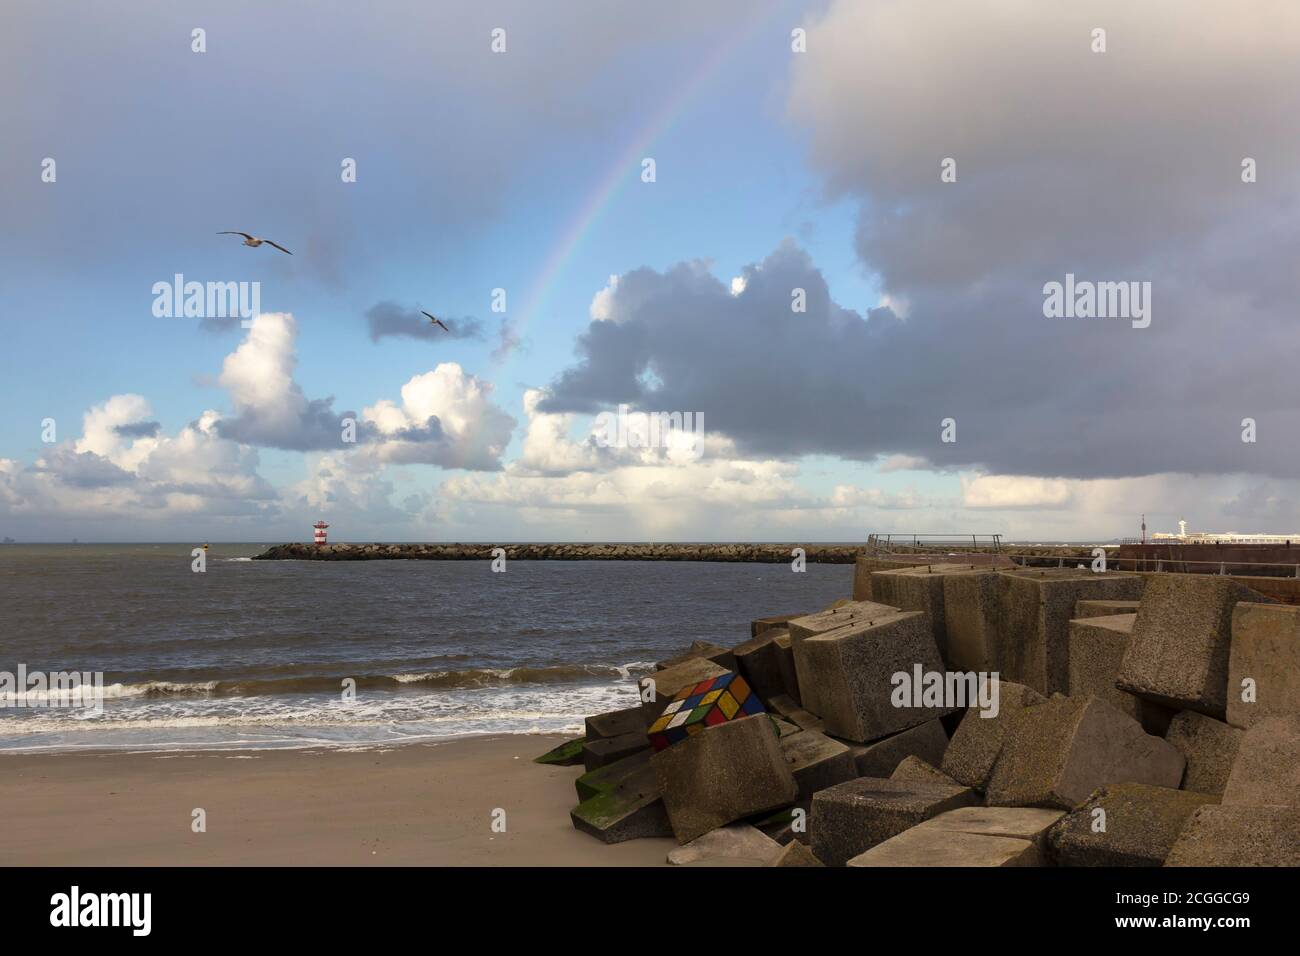 Seagulls flying over the Scheveningen harbor after a heavy rain shawer Stock Photo